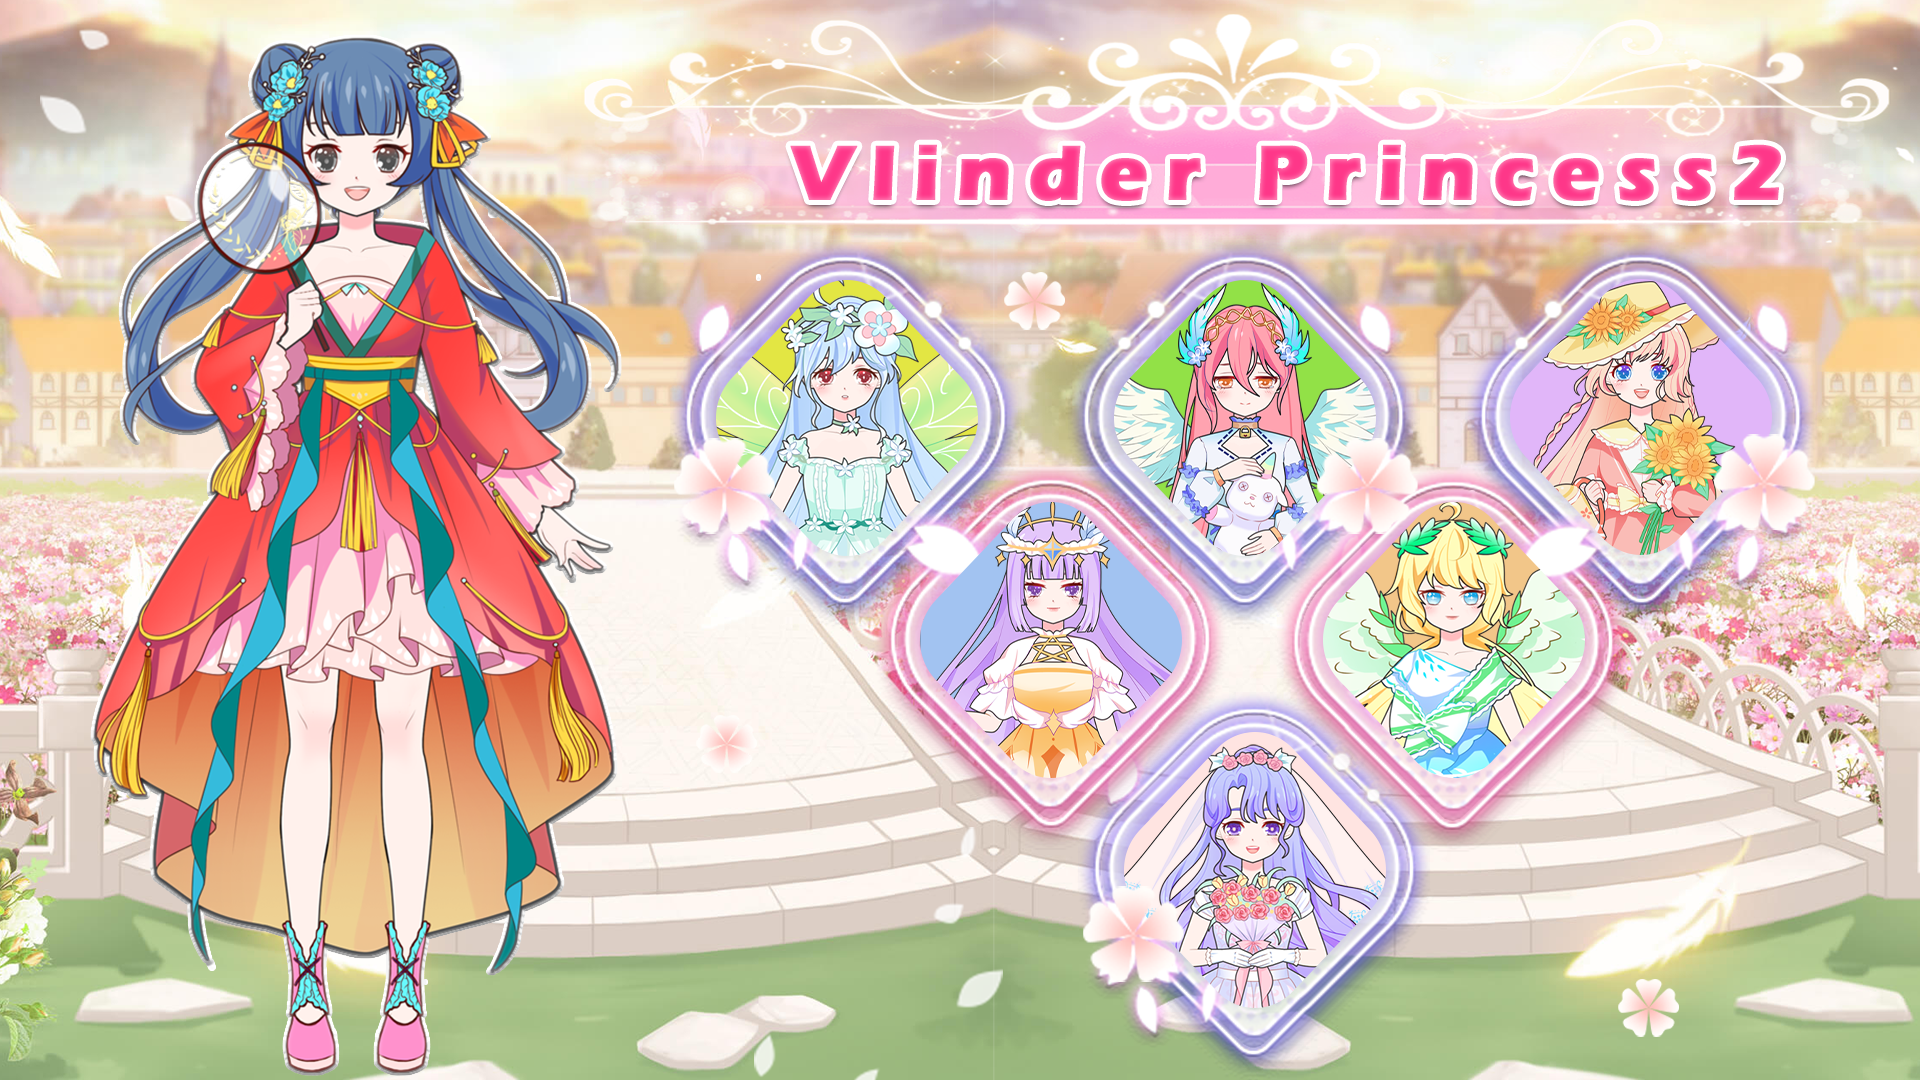 Screenshot 1 of Vlinder Princess2: ហ្គេមស្លៀកពាក់តុក្កតា រចនាប័ទ្មរូបតំណាង 